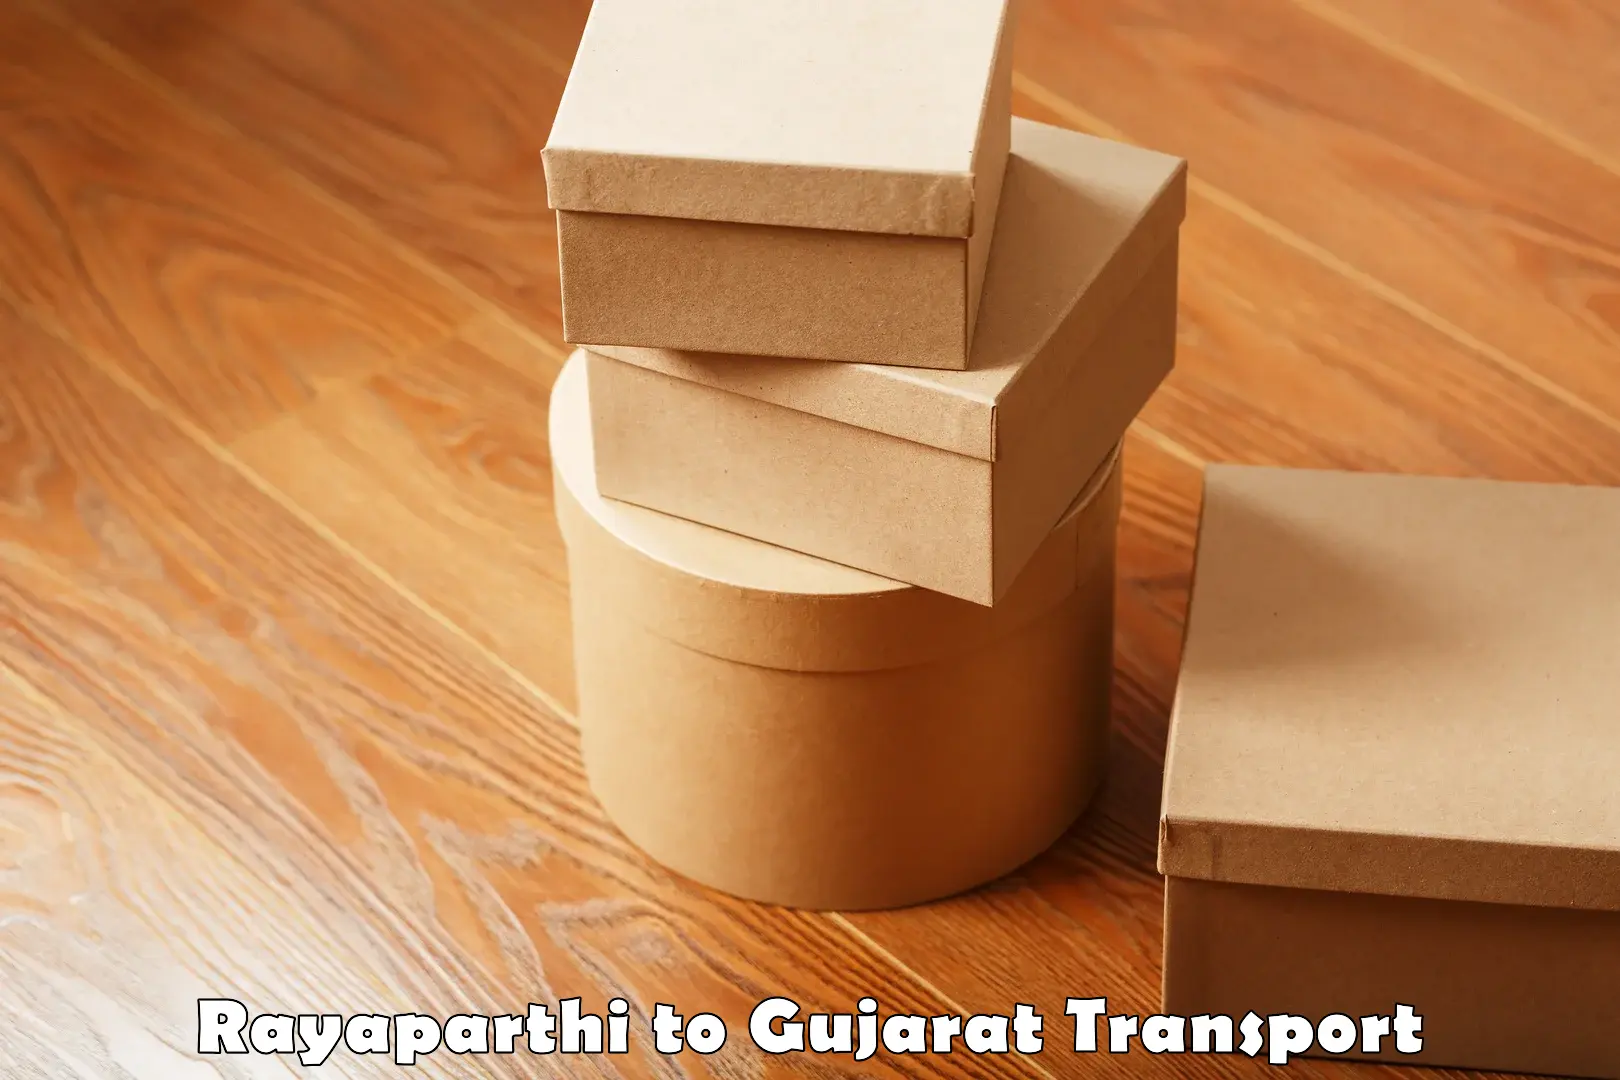 Delivery service Rayaparthi to Gujarat